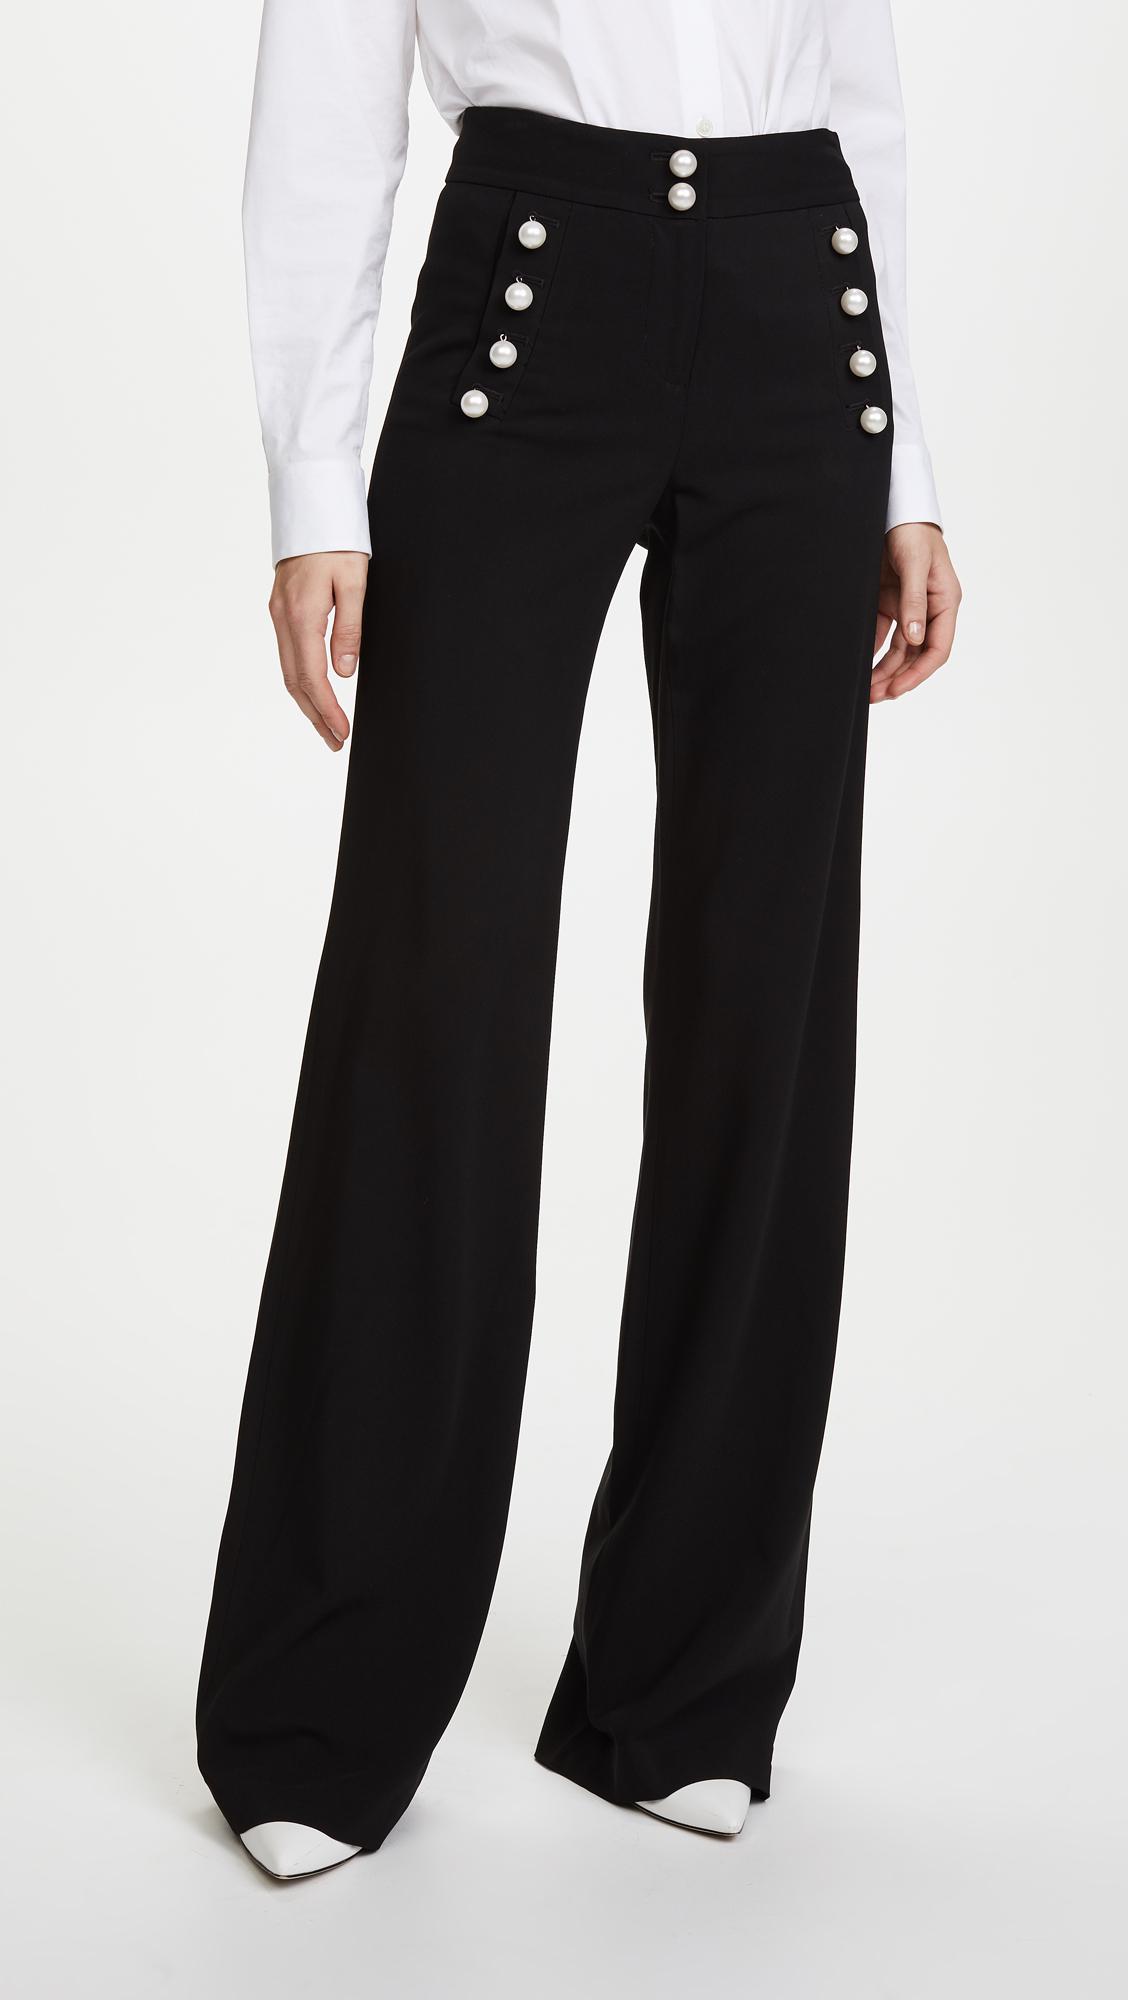 Veronica Beard Synthetic Adley Pants in Black | Lyst